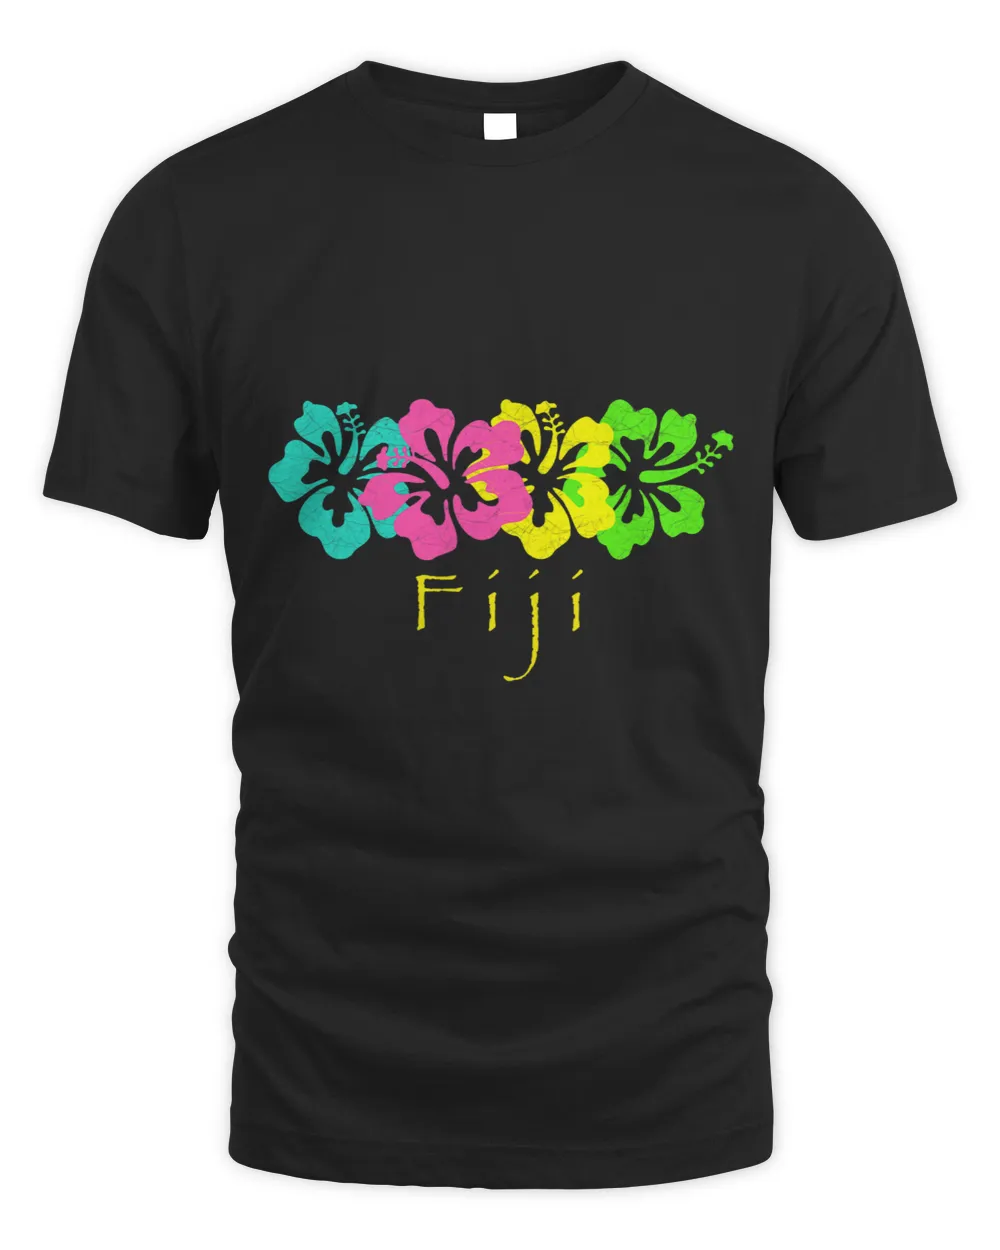 Fiji Tropical Beach Tee 2Fiji Travel Surf Tee